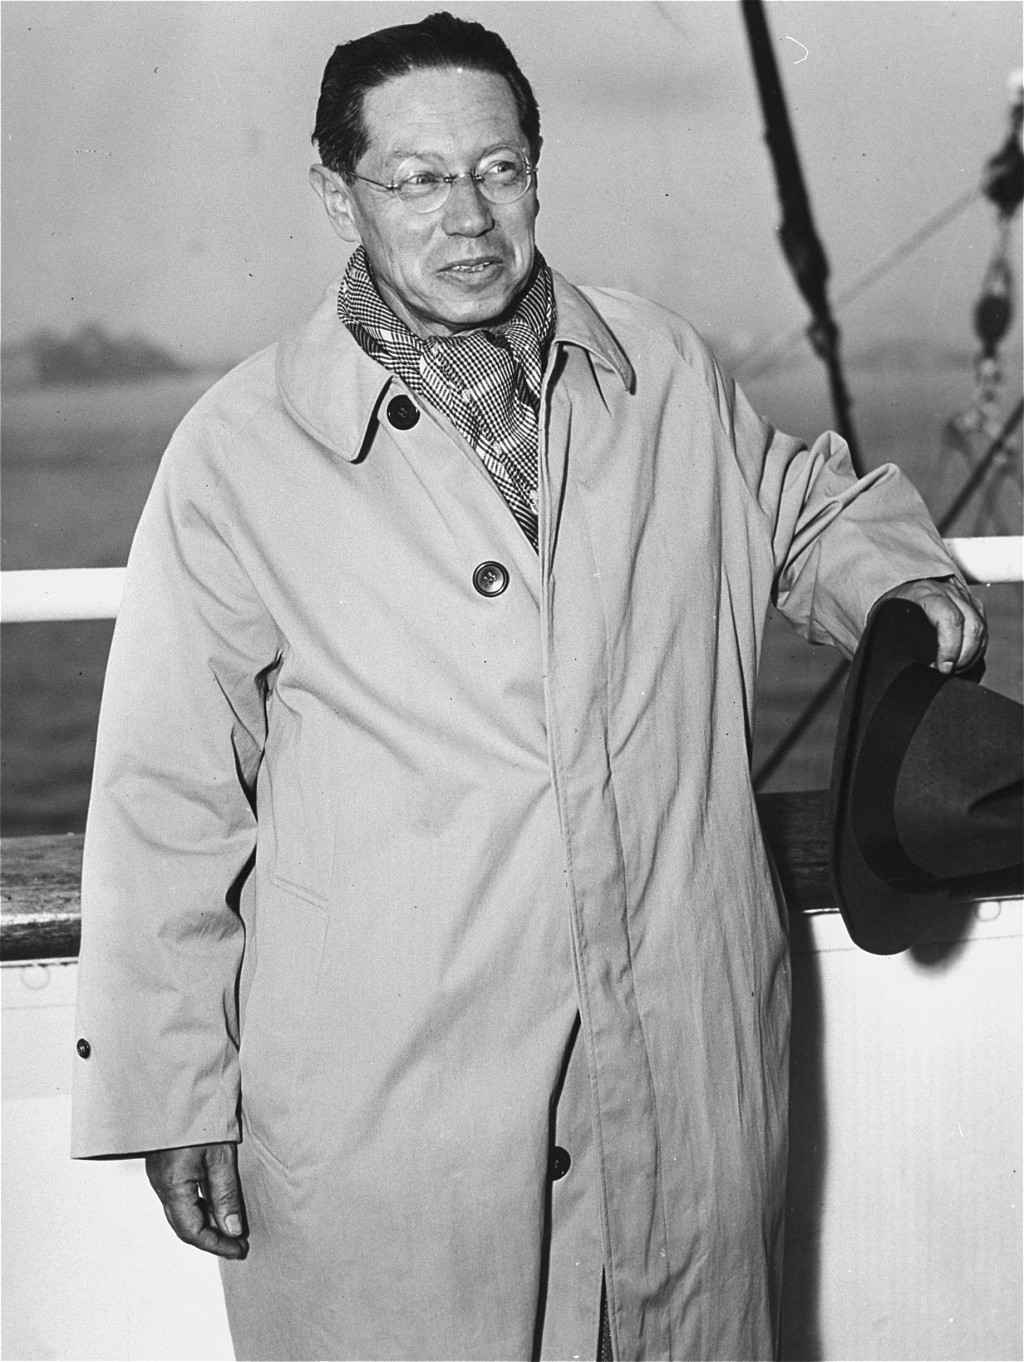 Lion Feuchtwanger aboard the ship Excalibur, arriving in New York. United States, October 1940.